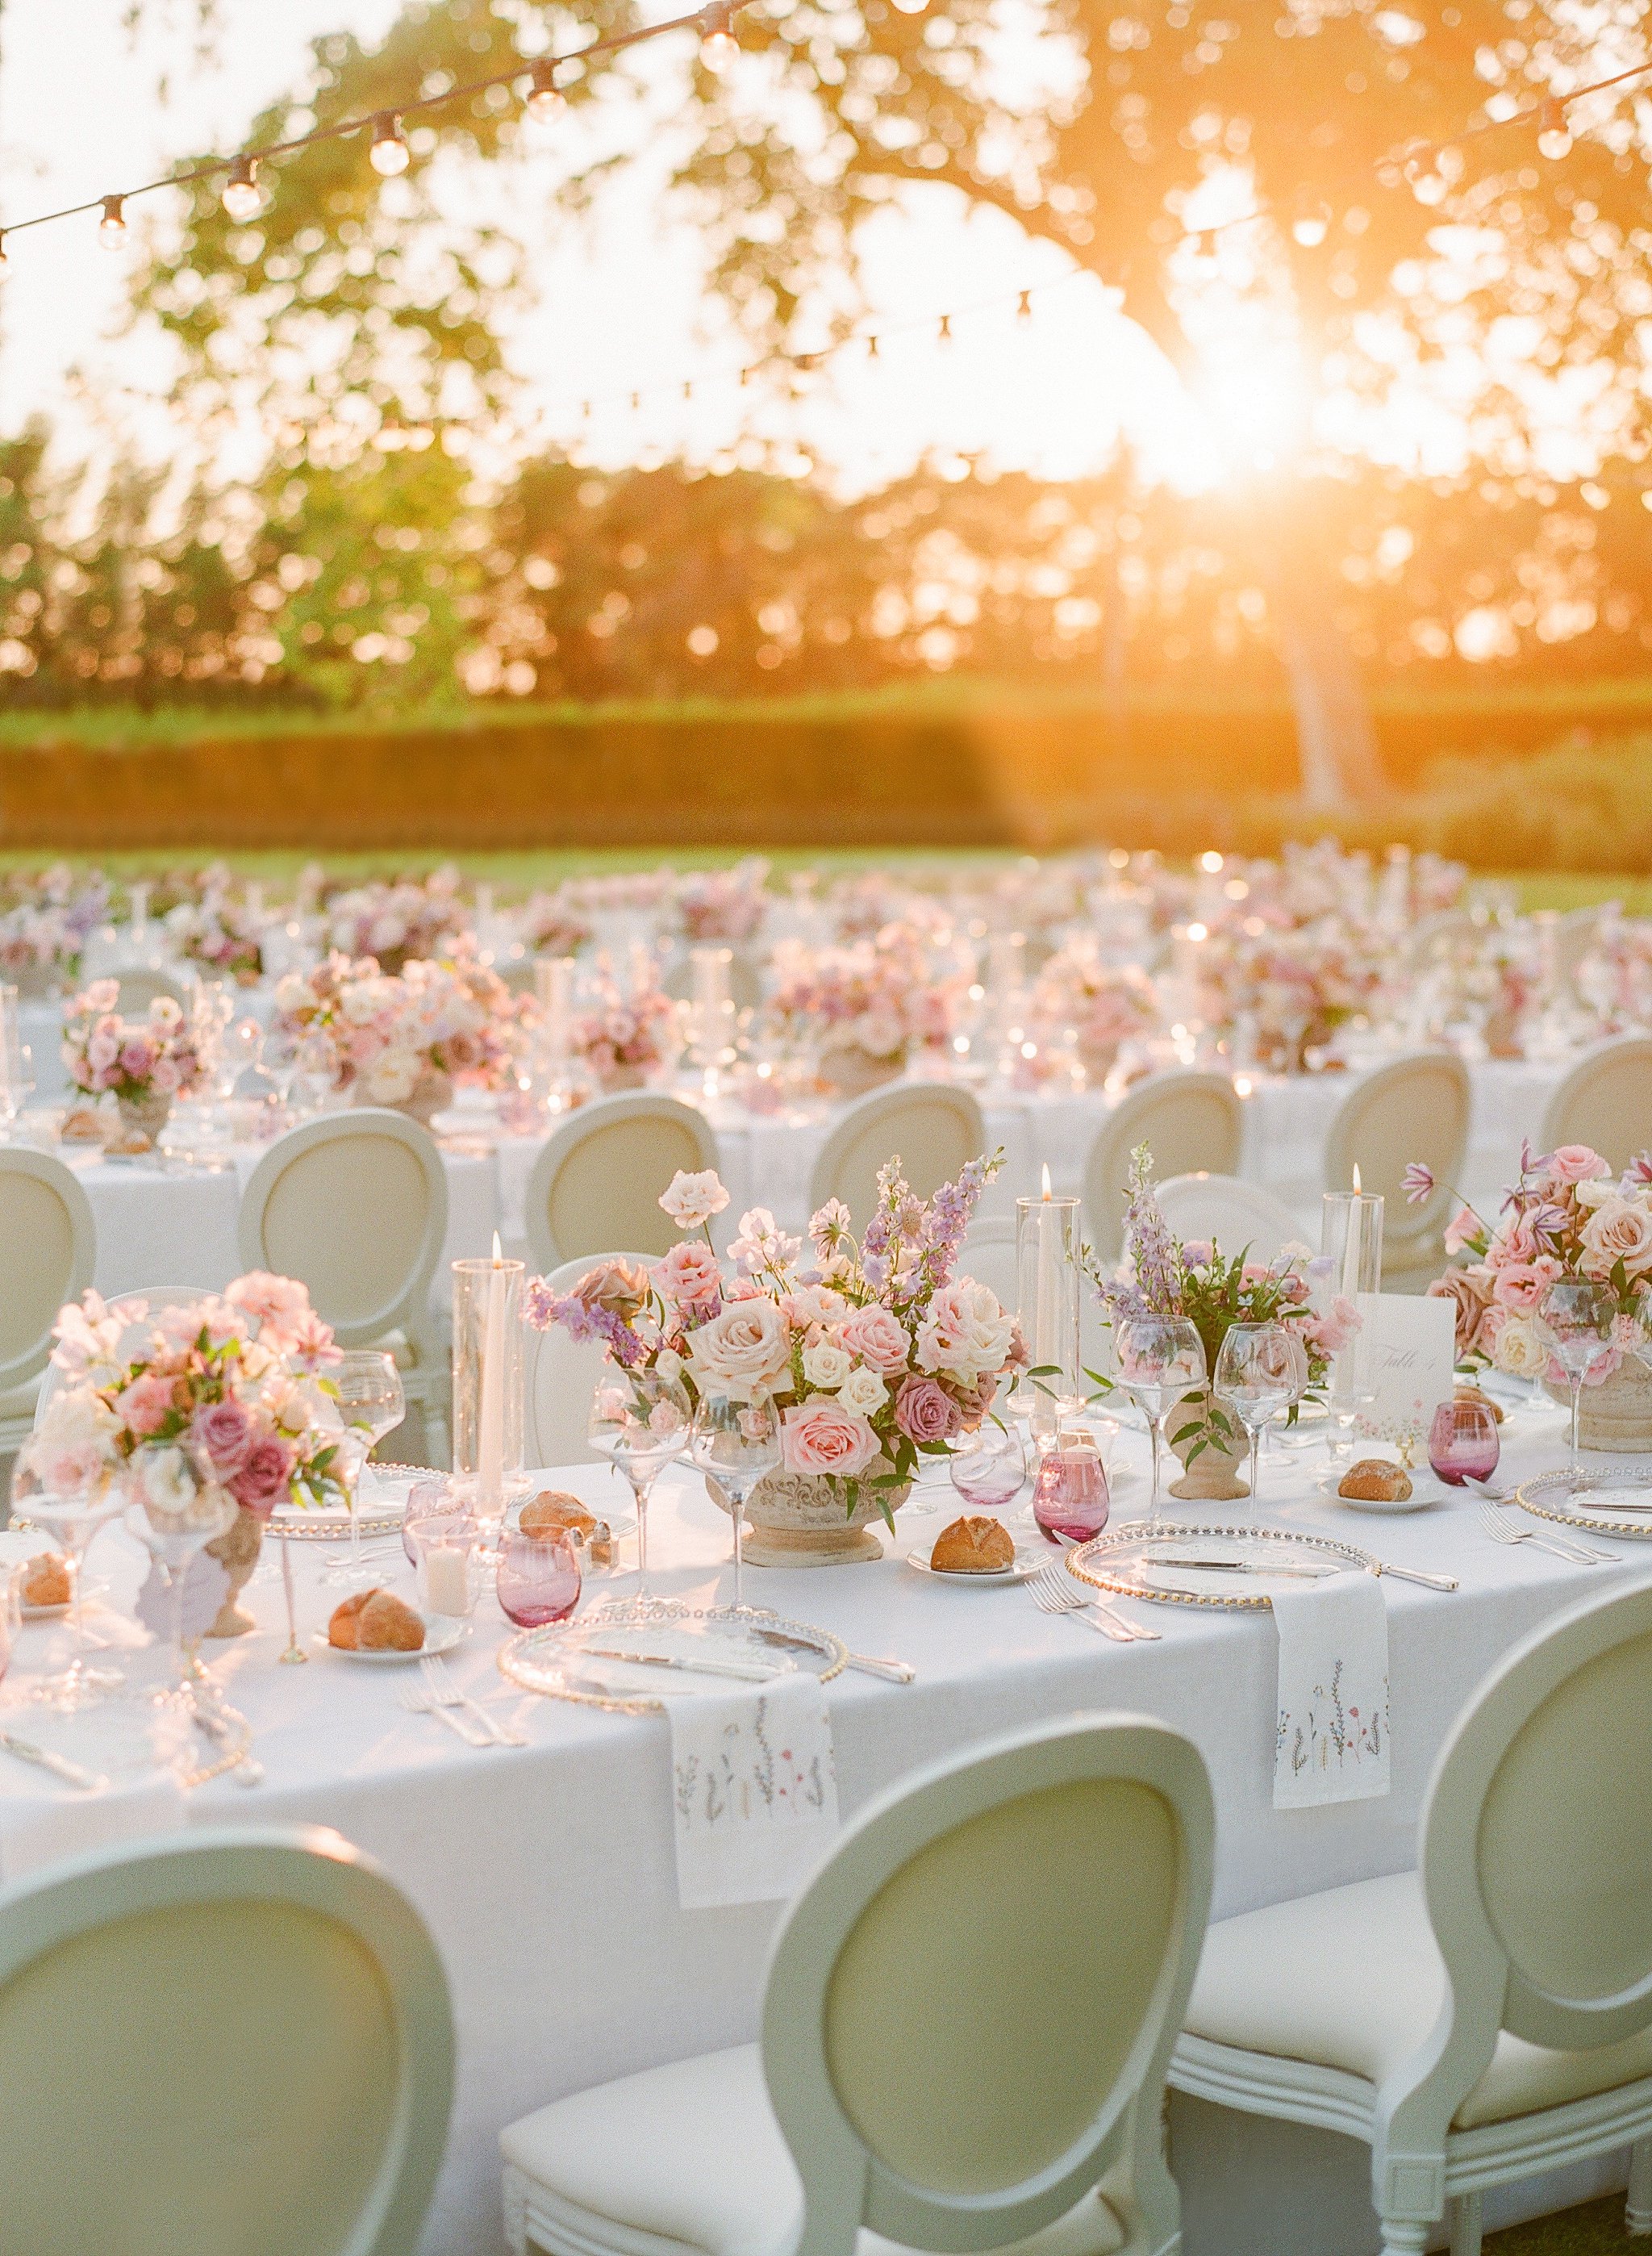 Dreamy-wedding-dinner-pastel-colors-sunset-wedding-golden-hour-chateau-wedding-south-of-france-wedding-dinner-decoration-inspiration-luxury-wedding-design.jpg